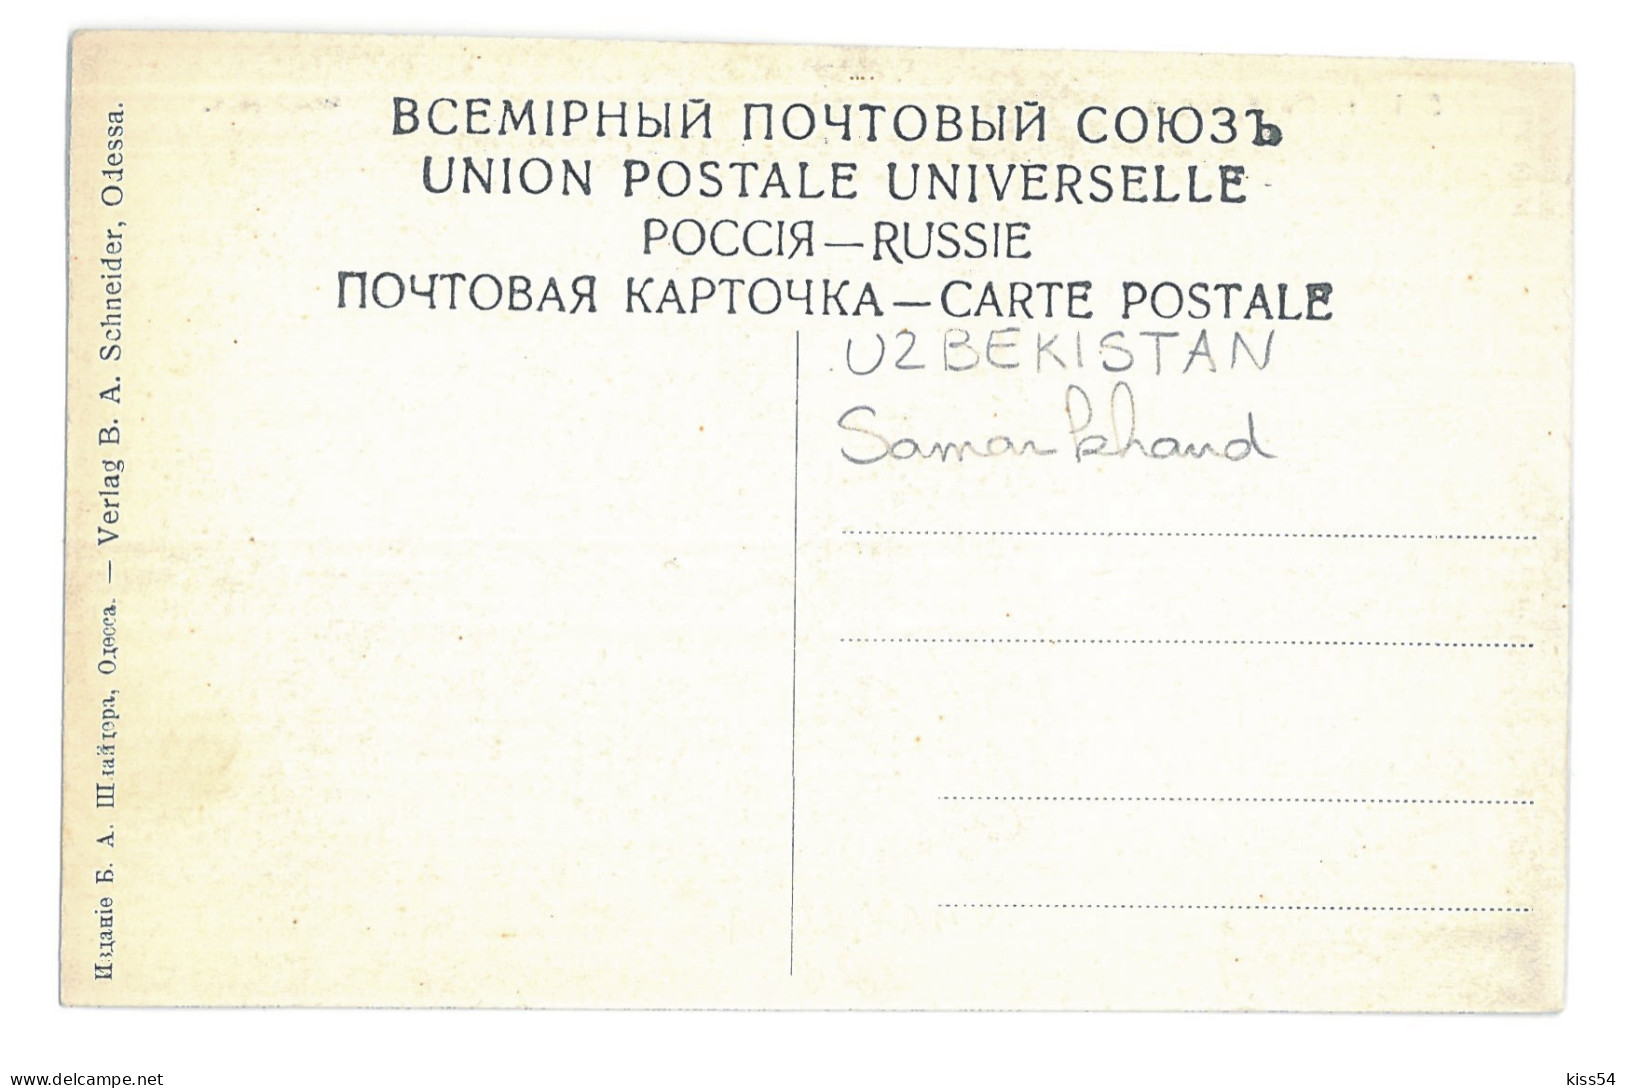 U 24 - 15538 SAMARKAND, Panorama, Uzbekistan - Old Postcard - Unused - Ouzbékistan